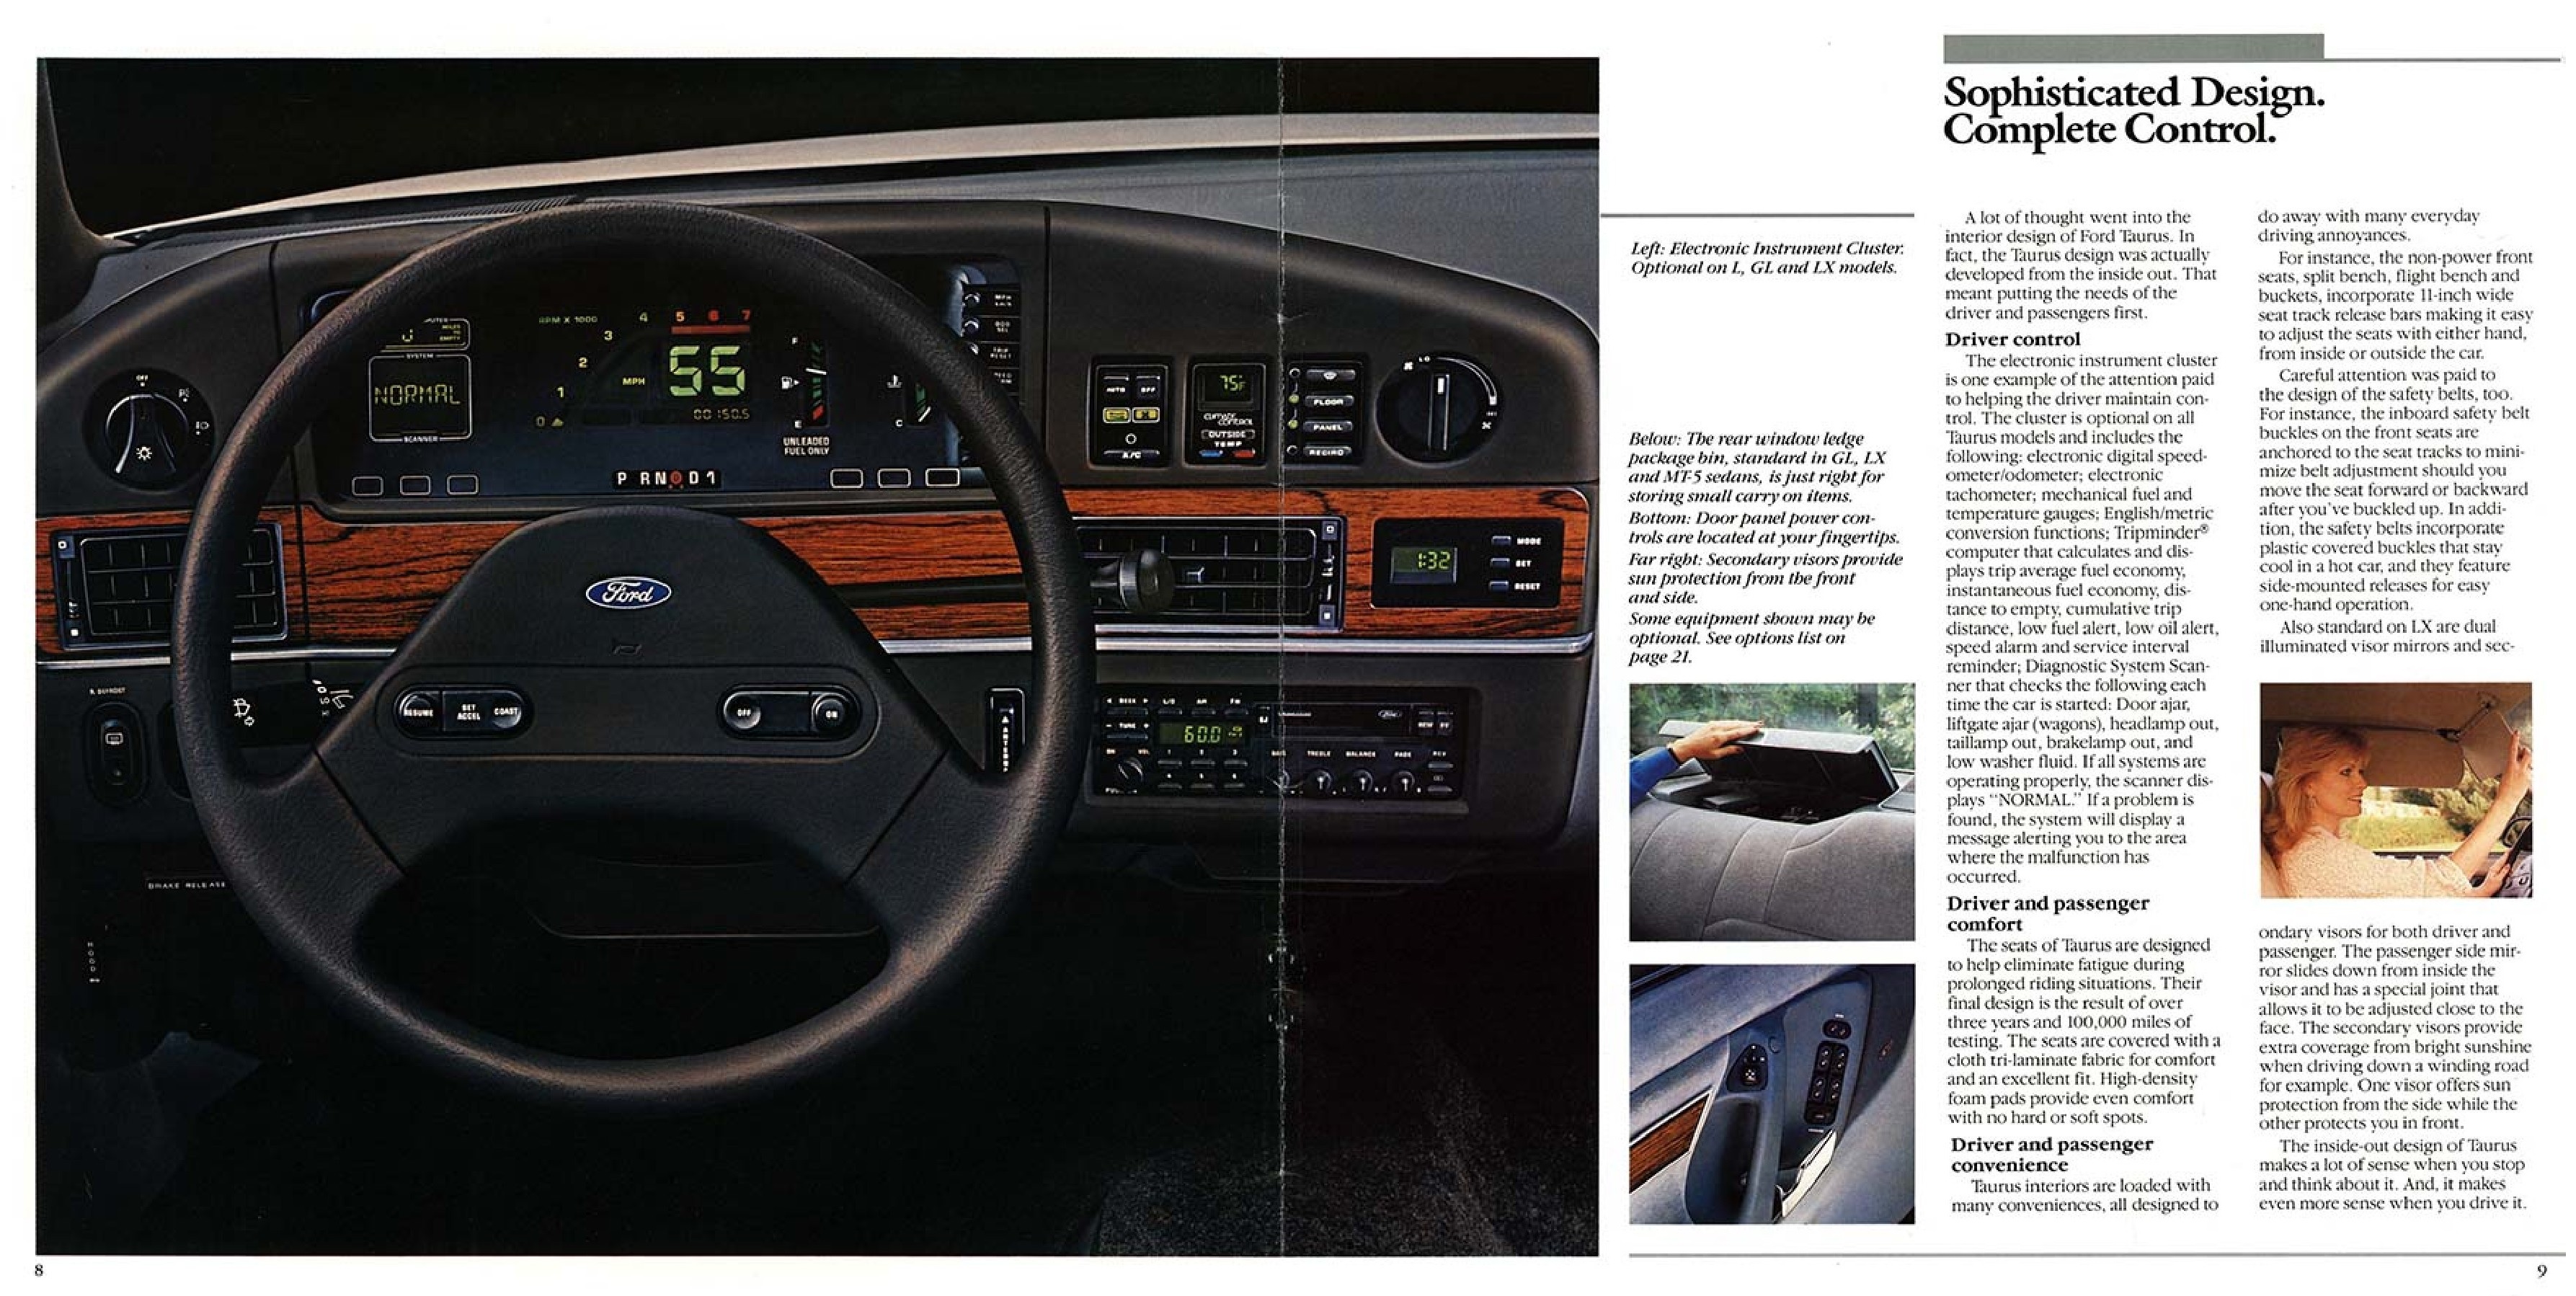 1987 Ford Taurus 08-09